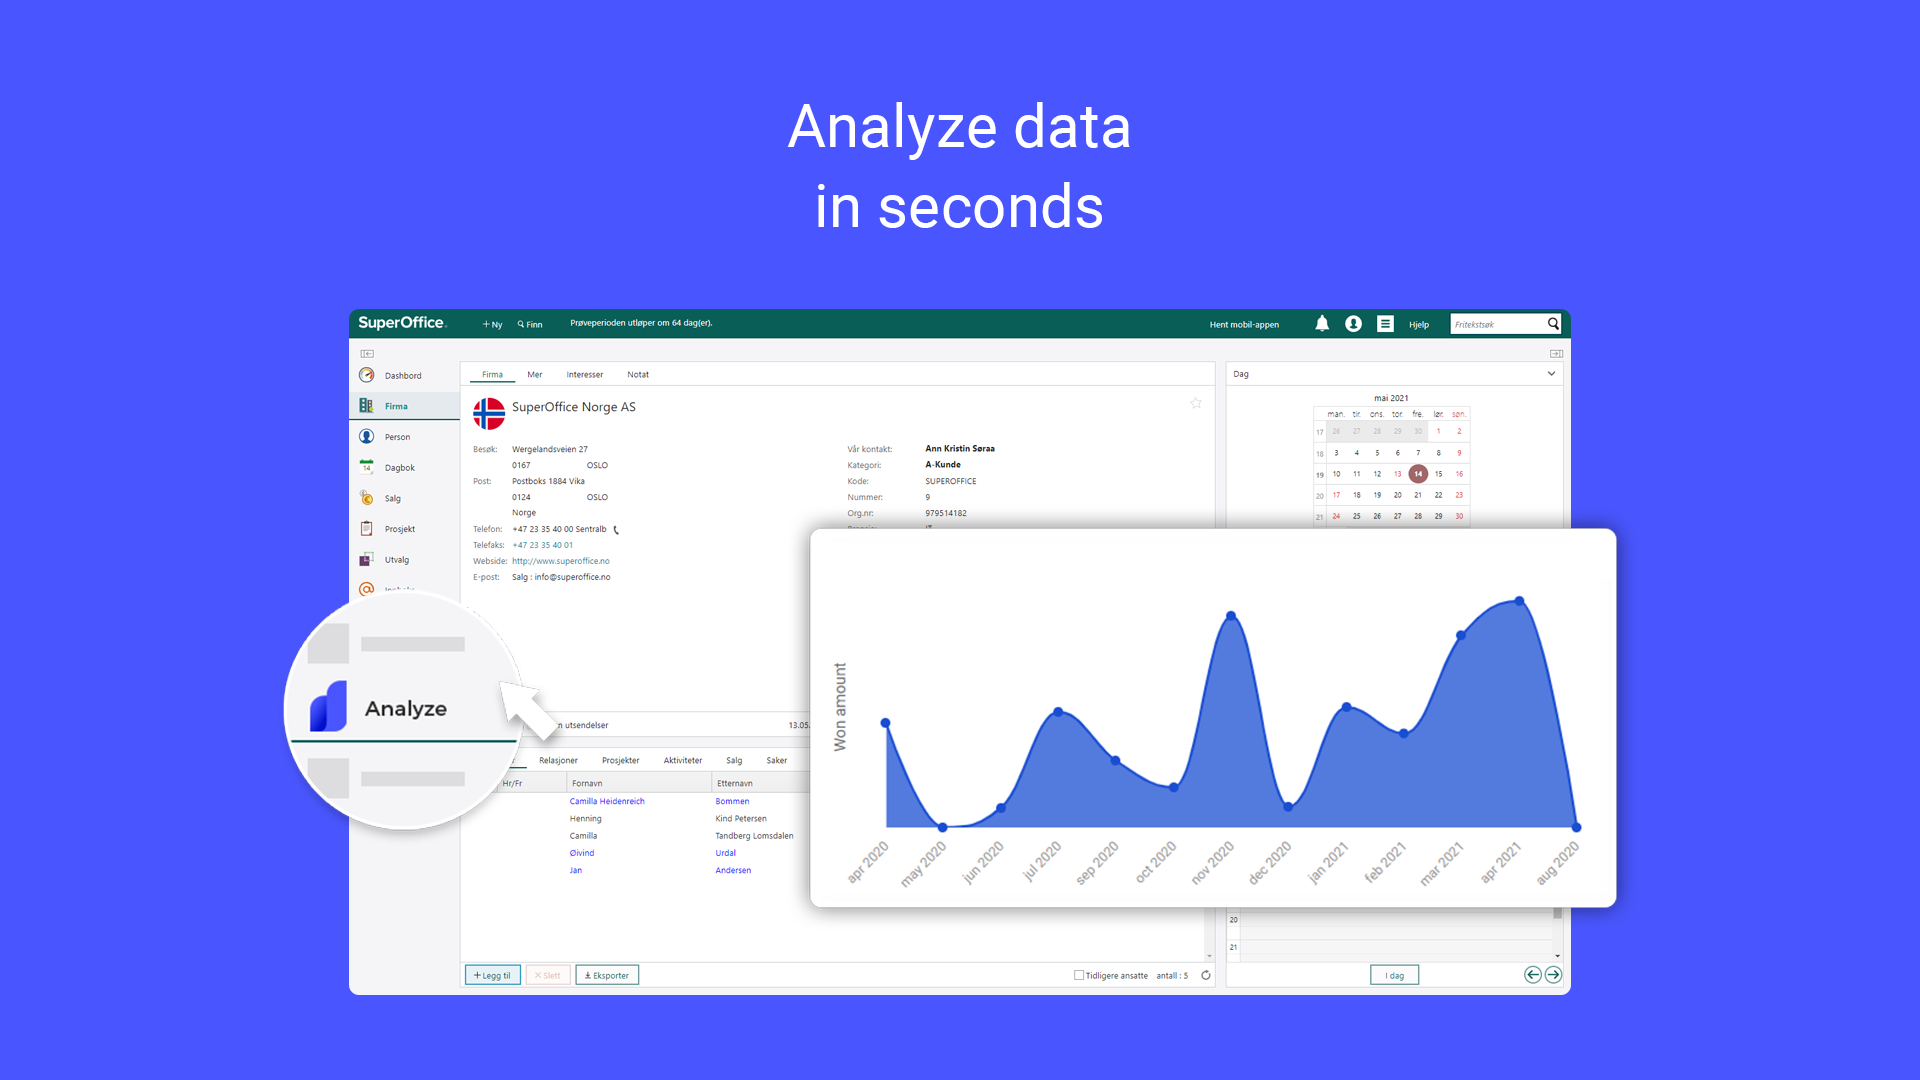 5. Analyze data in seconds.